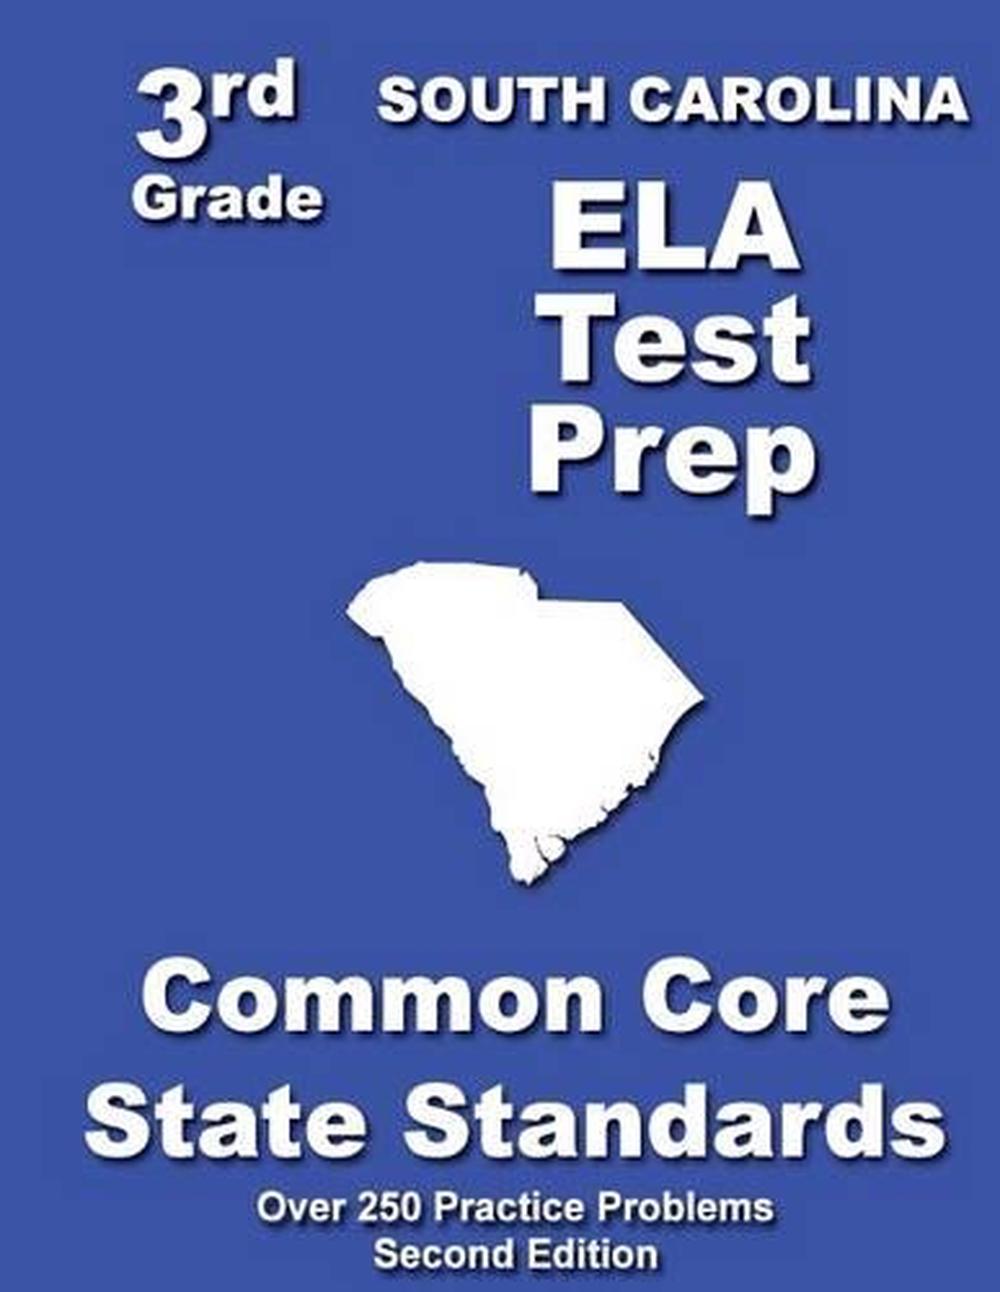 South Carolina 3rd Grade Ela Test Prep Common Core Learning Standards